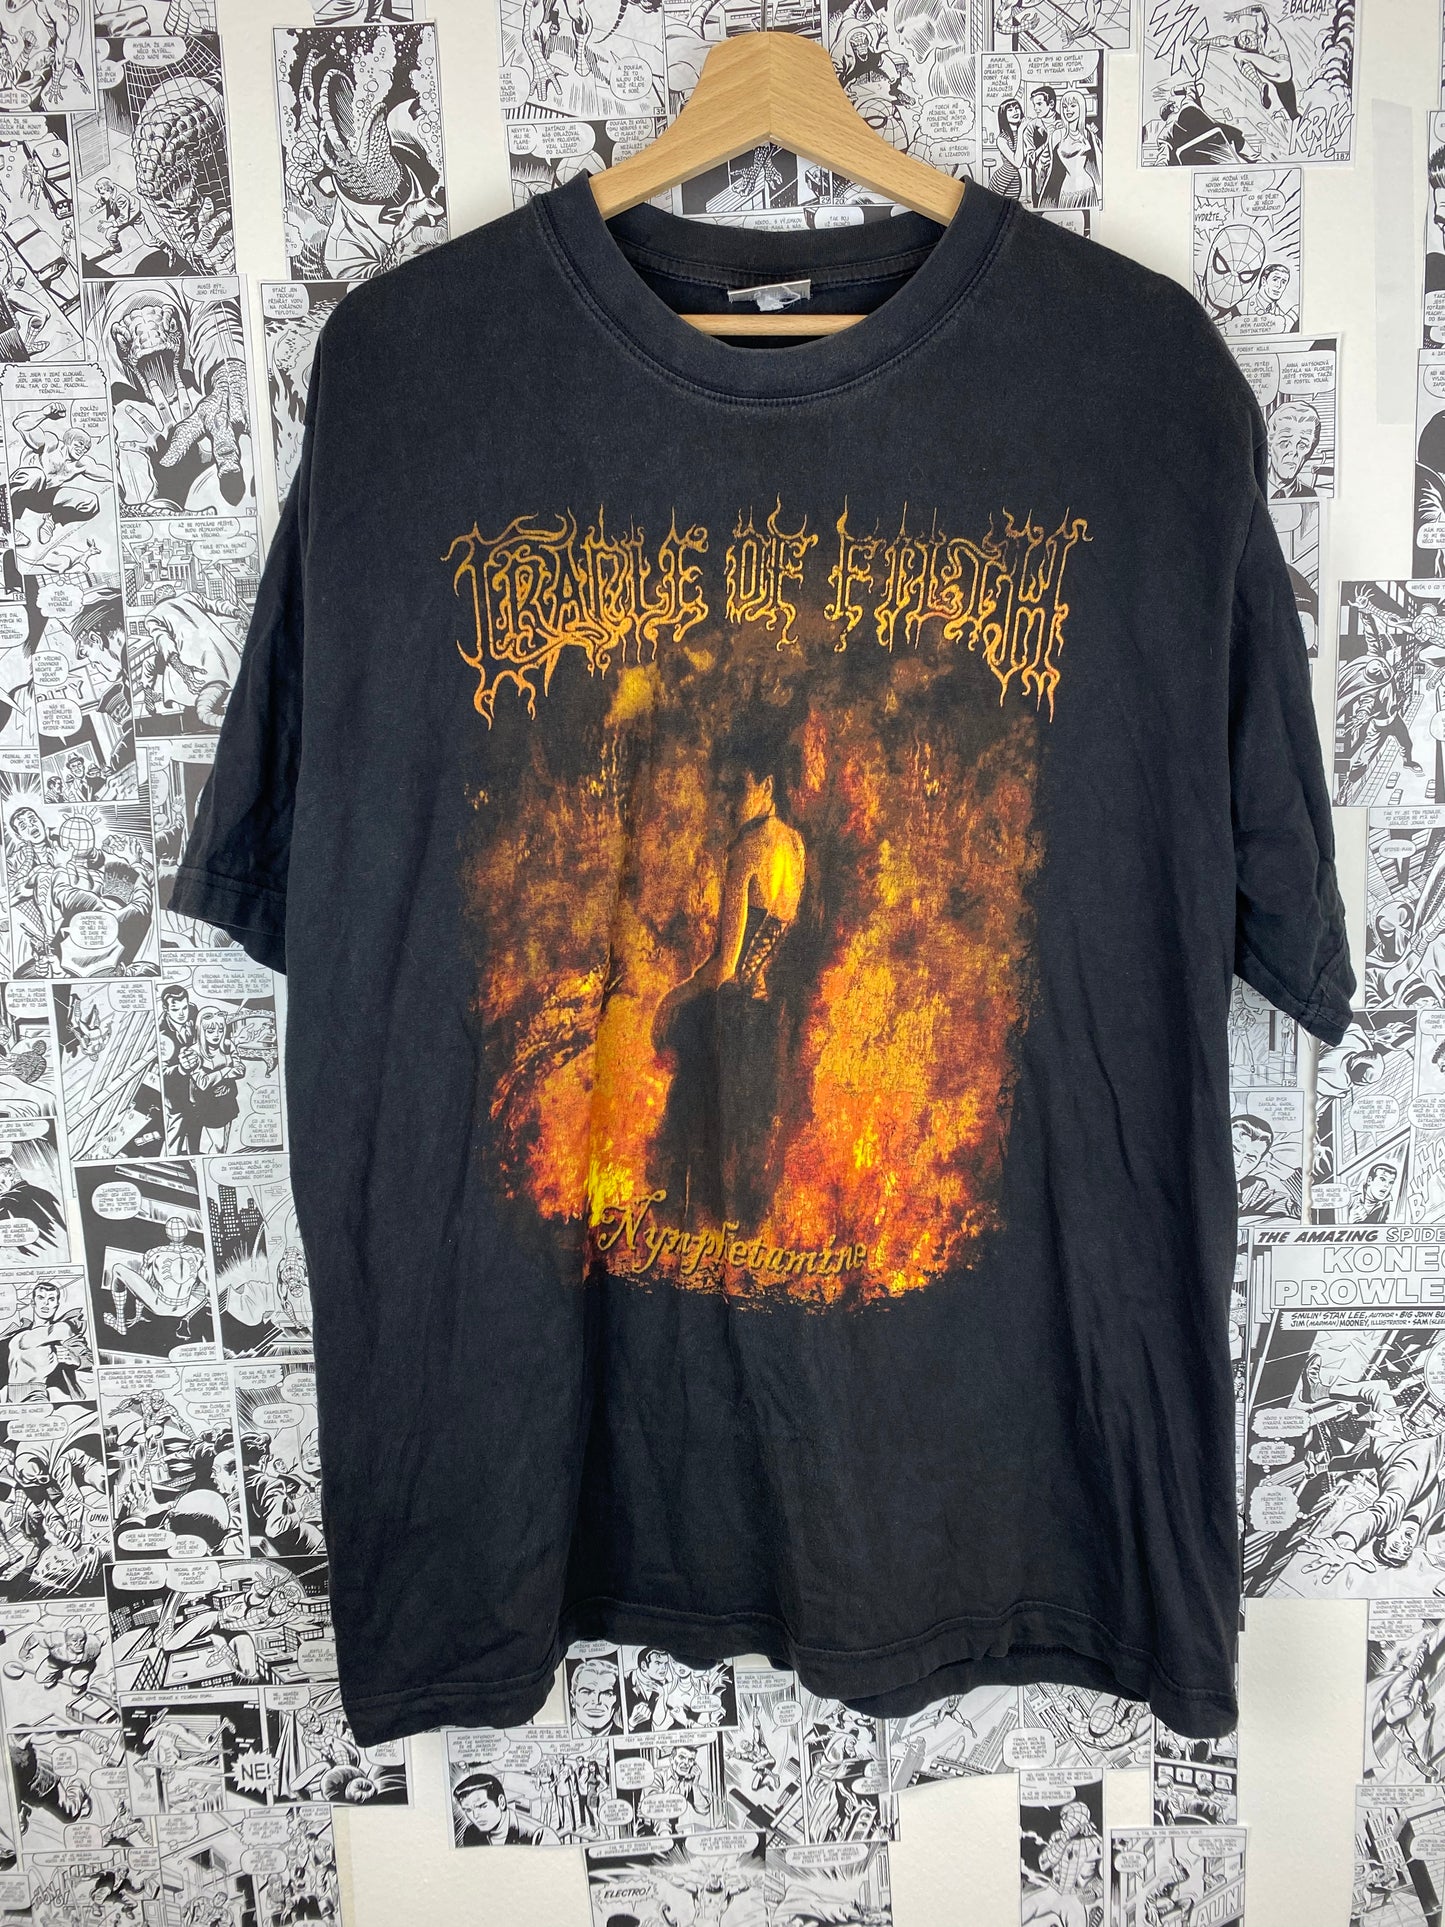 Vintage Cradle of Filth “Nymphetamine” tour t-shirt - size XXL